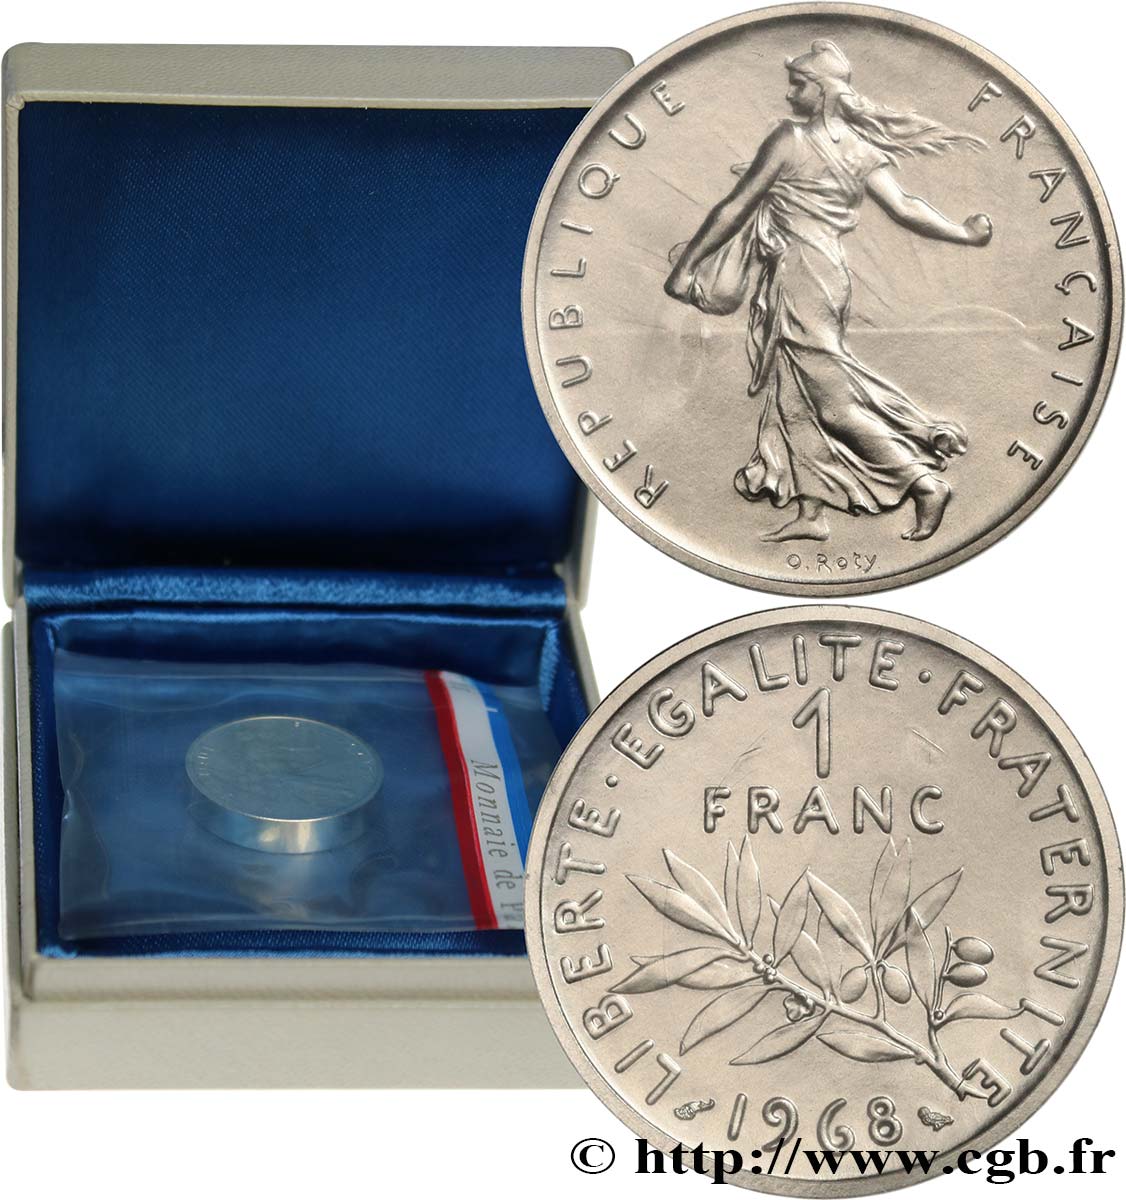 Piéfort Nickel de 1 franc Semeuse 1968 Paris GEM.104 P1 MS 